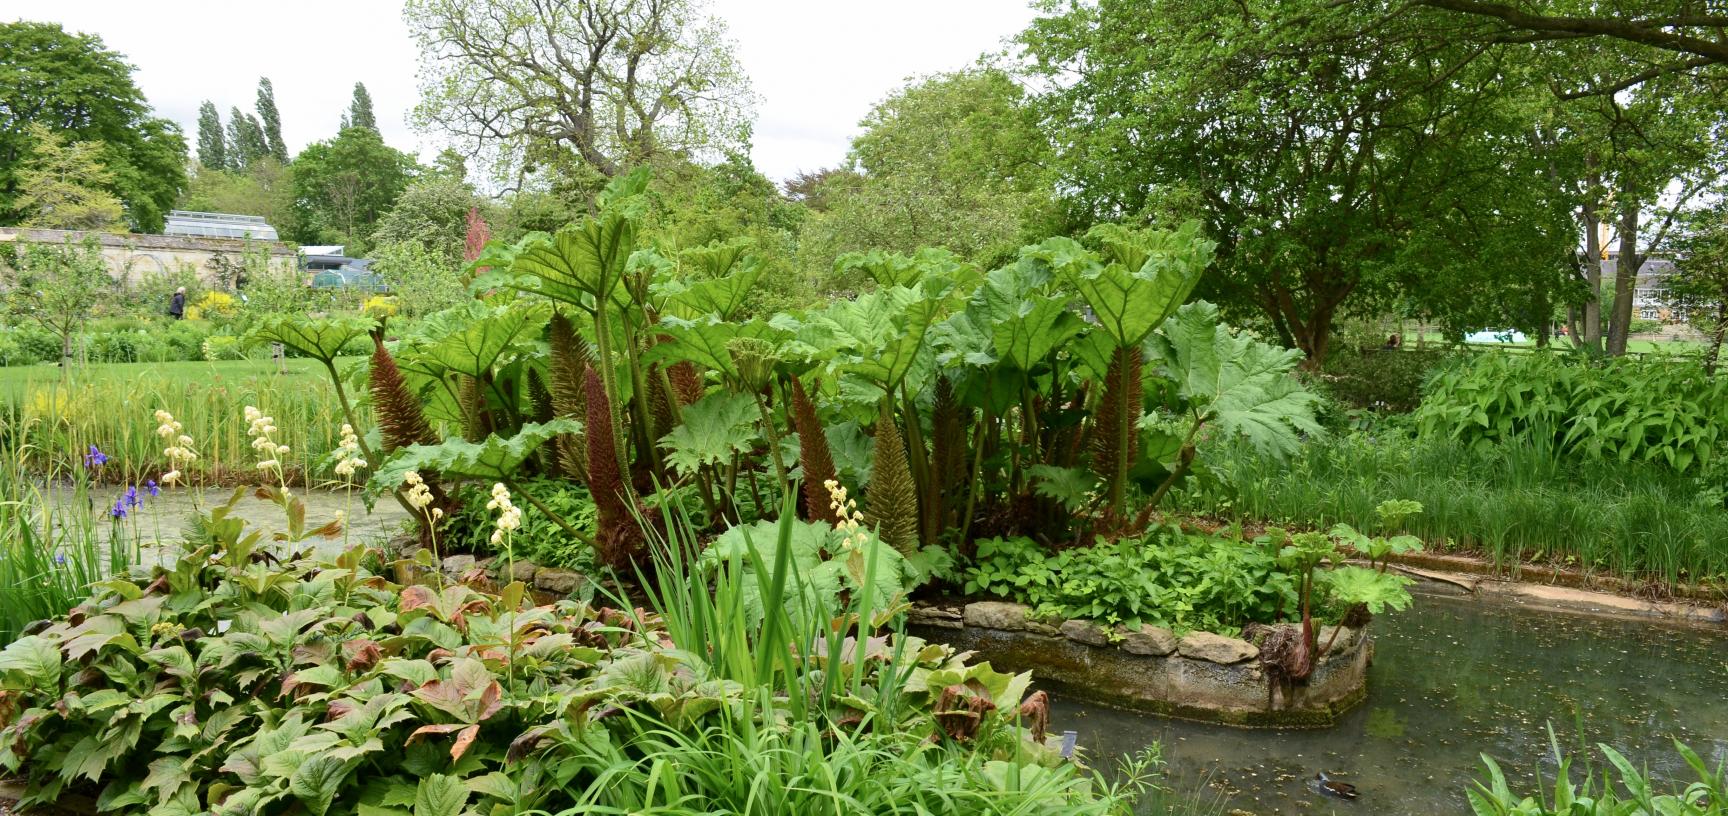 The Bog Garden